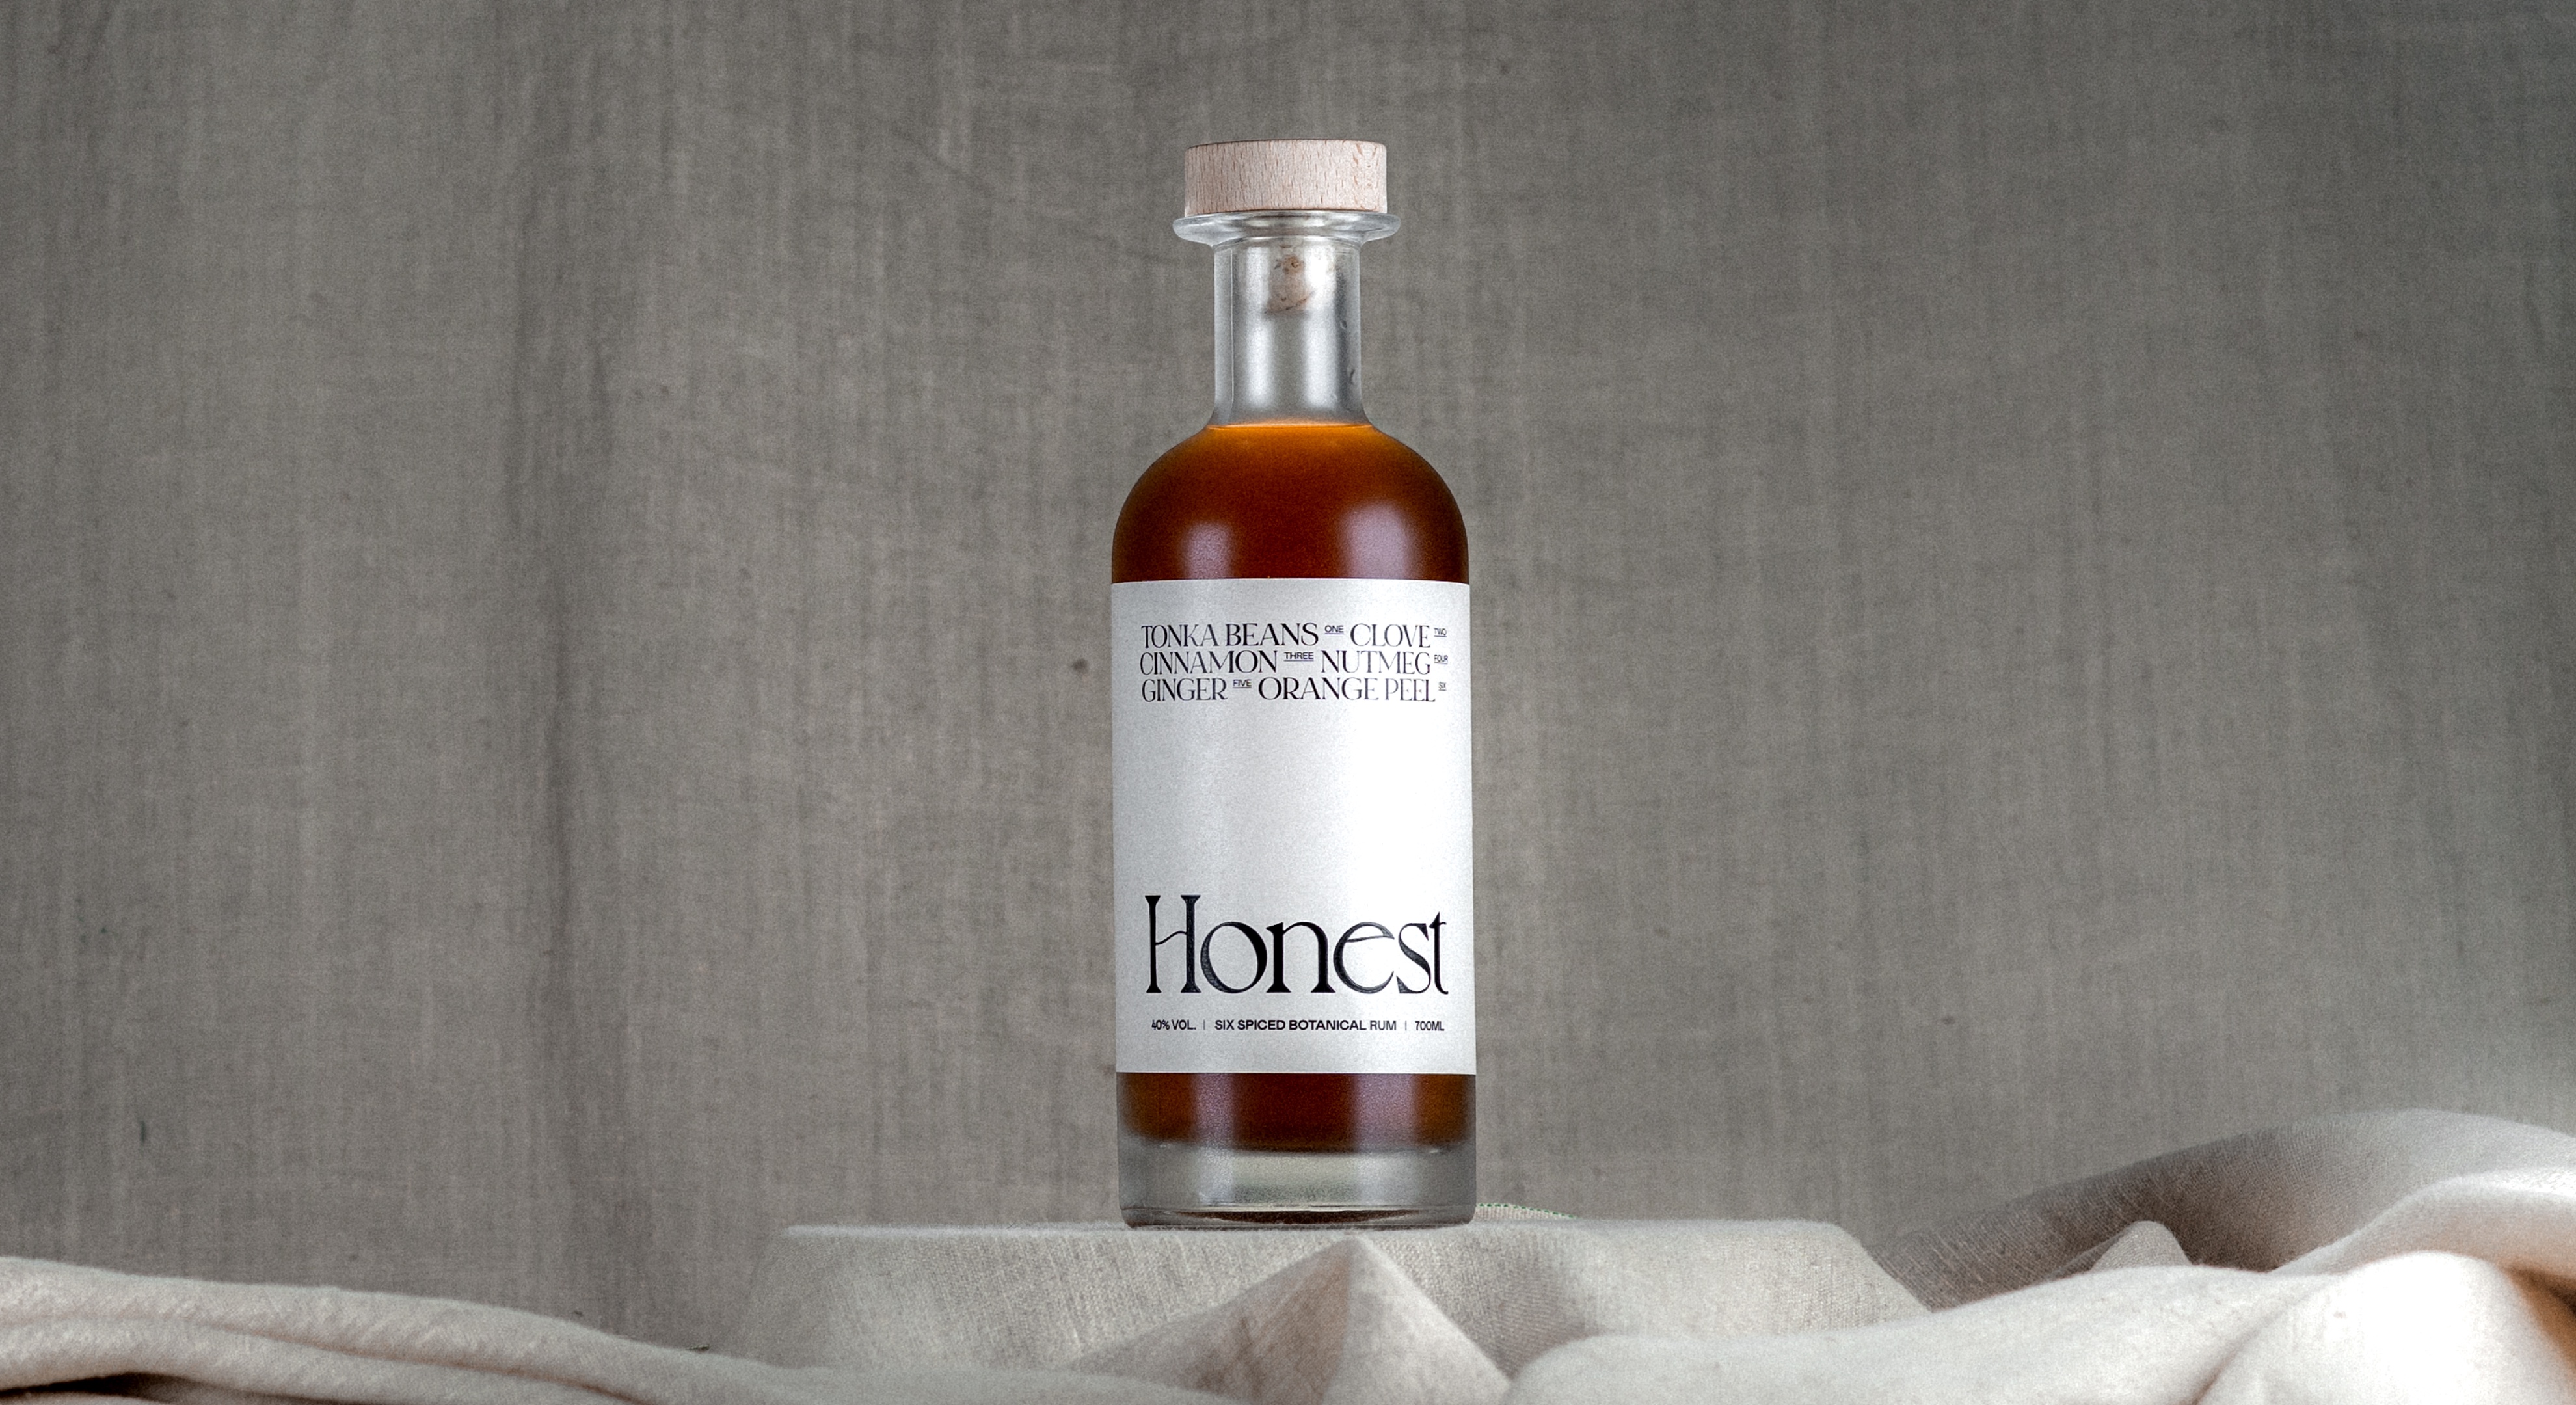 Honest is A Six Spiced, Plastic Free Botanical Rum